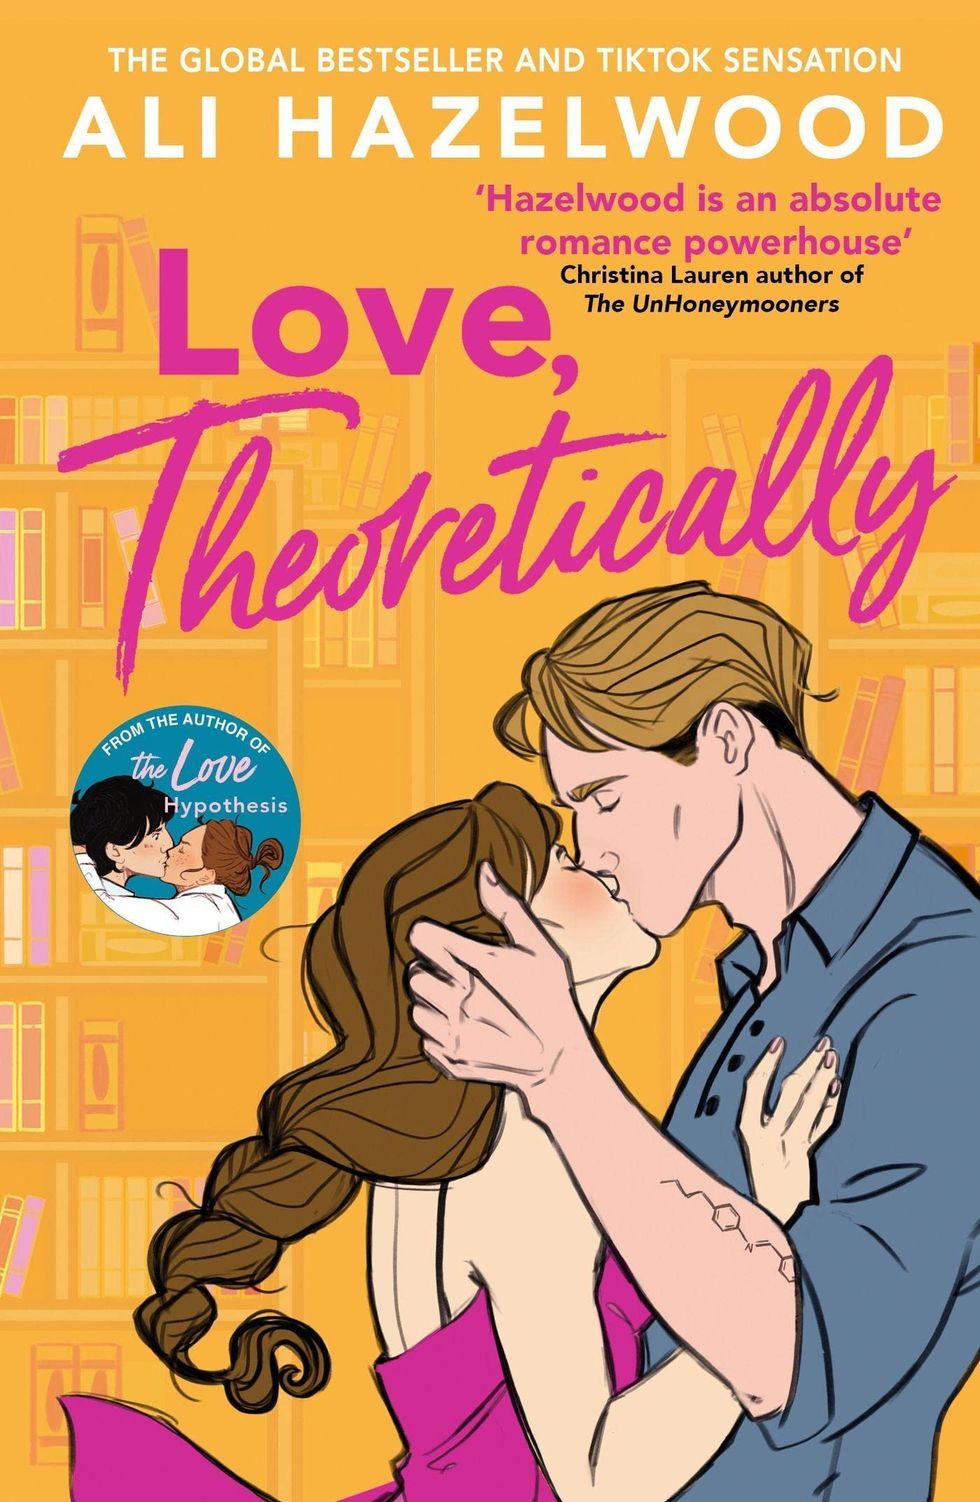 Love Theoretically by Ali Hazelwood